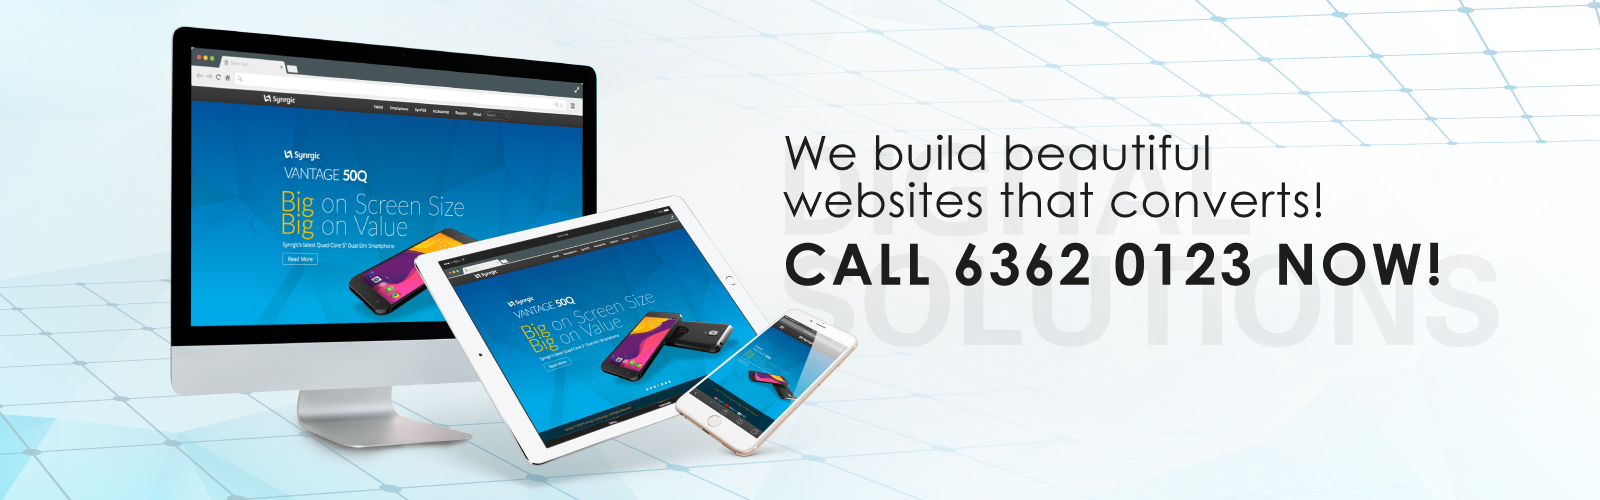 Custom web design services